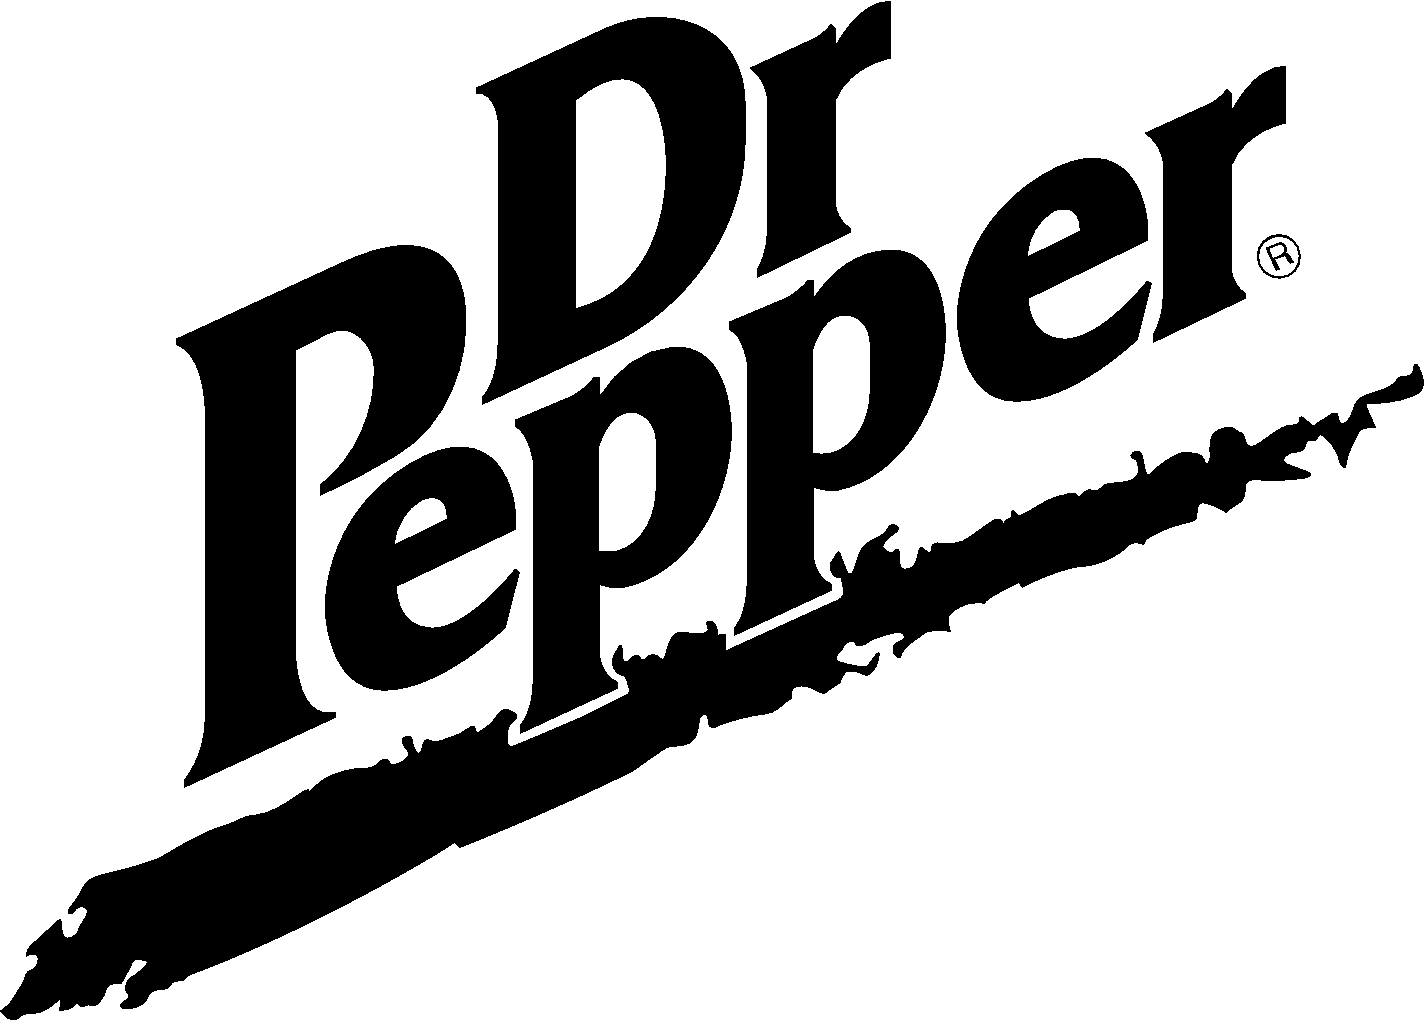 Dr Pepper Logos - dr pepper roblox